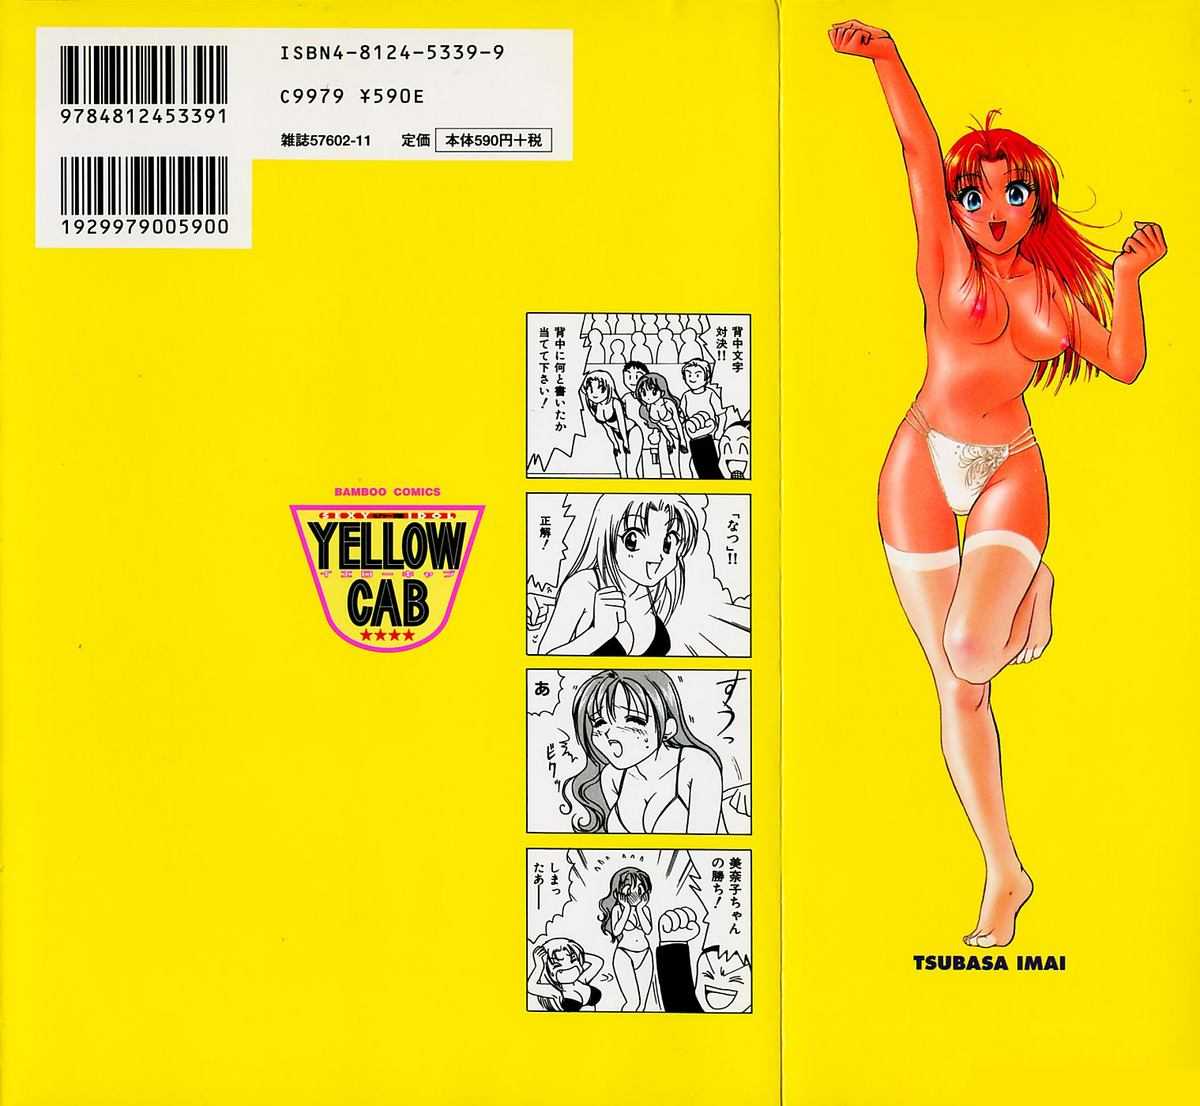 Sanri Yoko] Sexy Tenshi Yellow Vol. 1 leer en línea, descargar gratis [1/17]